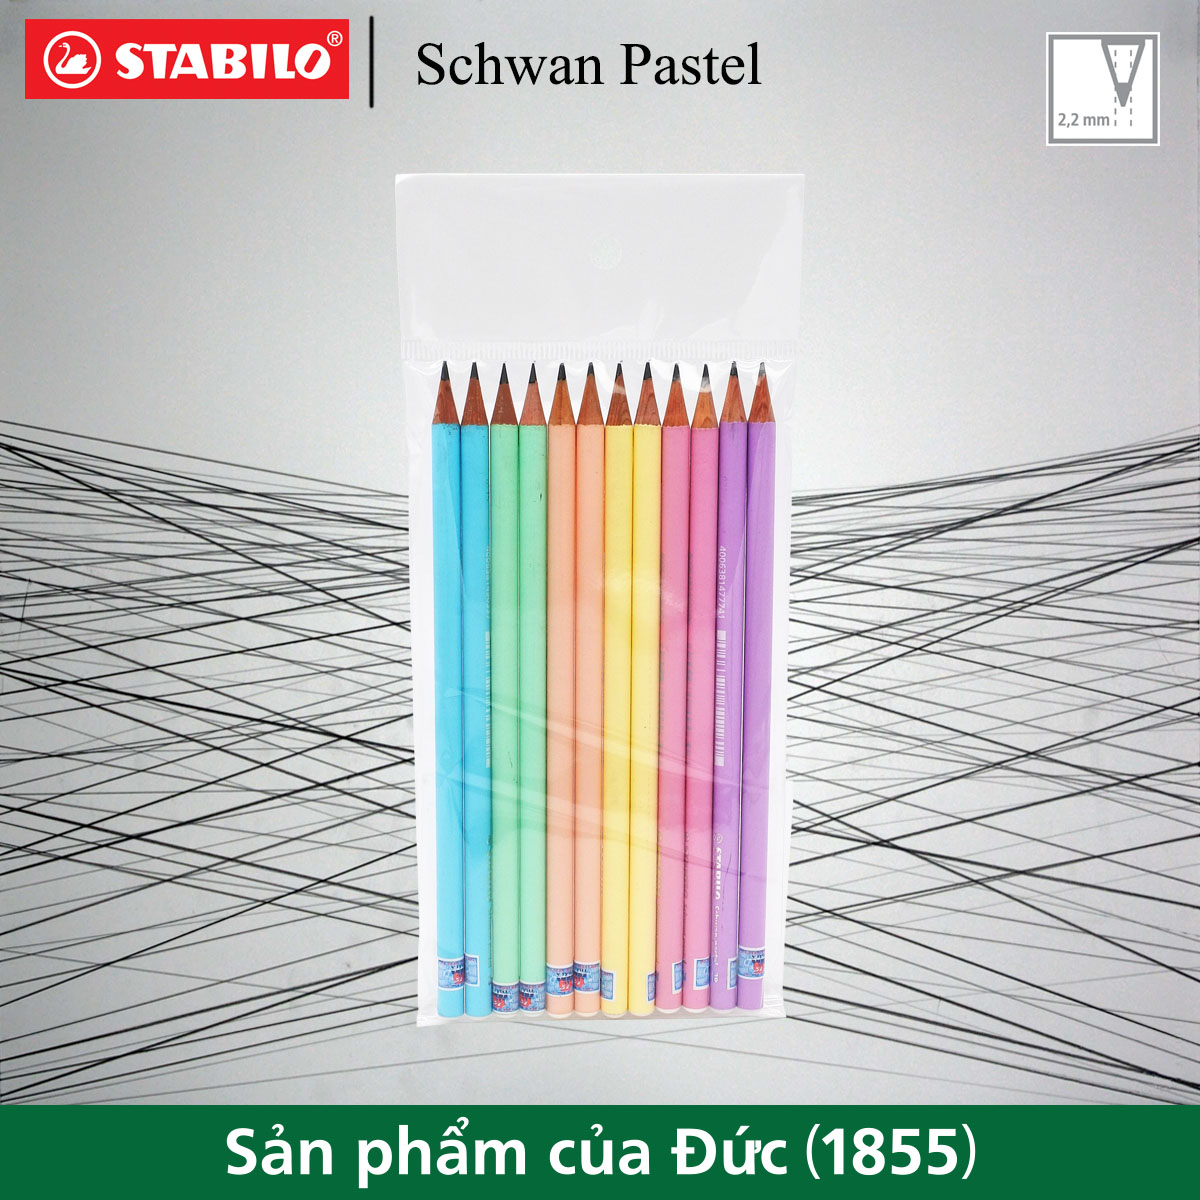 Bộ 12 bút chì gỗ STABILO Schwan Pastel 421 2B